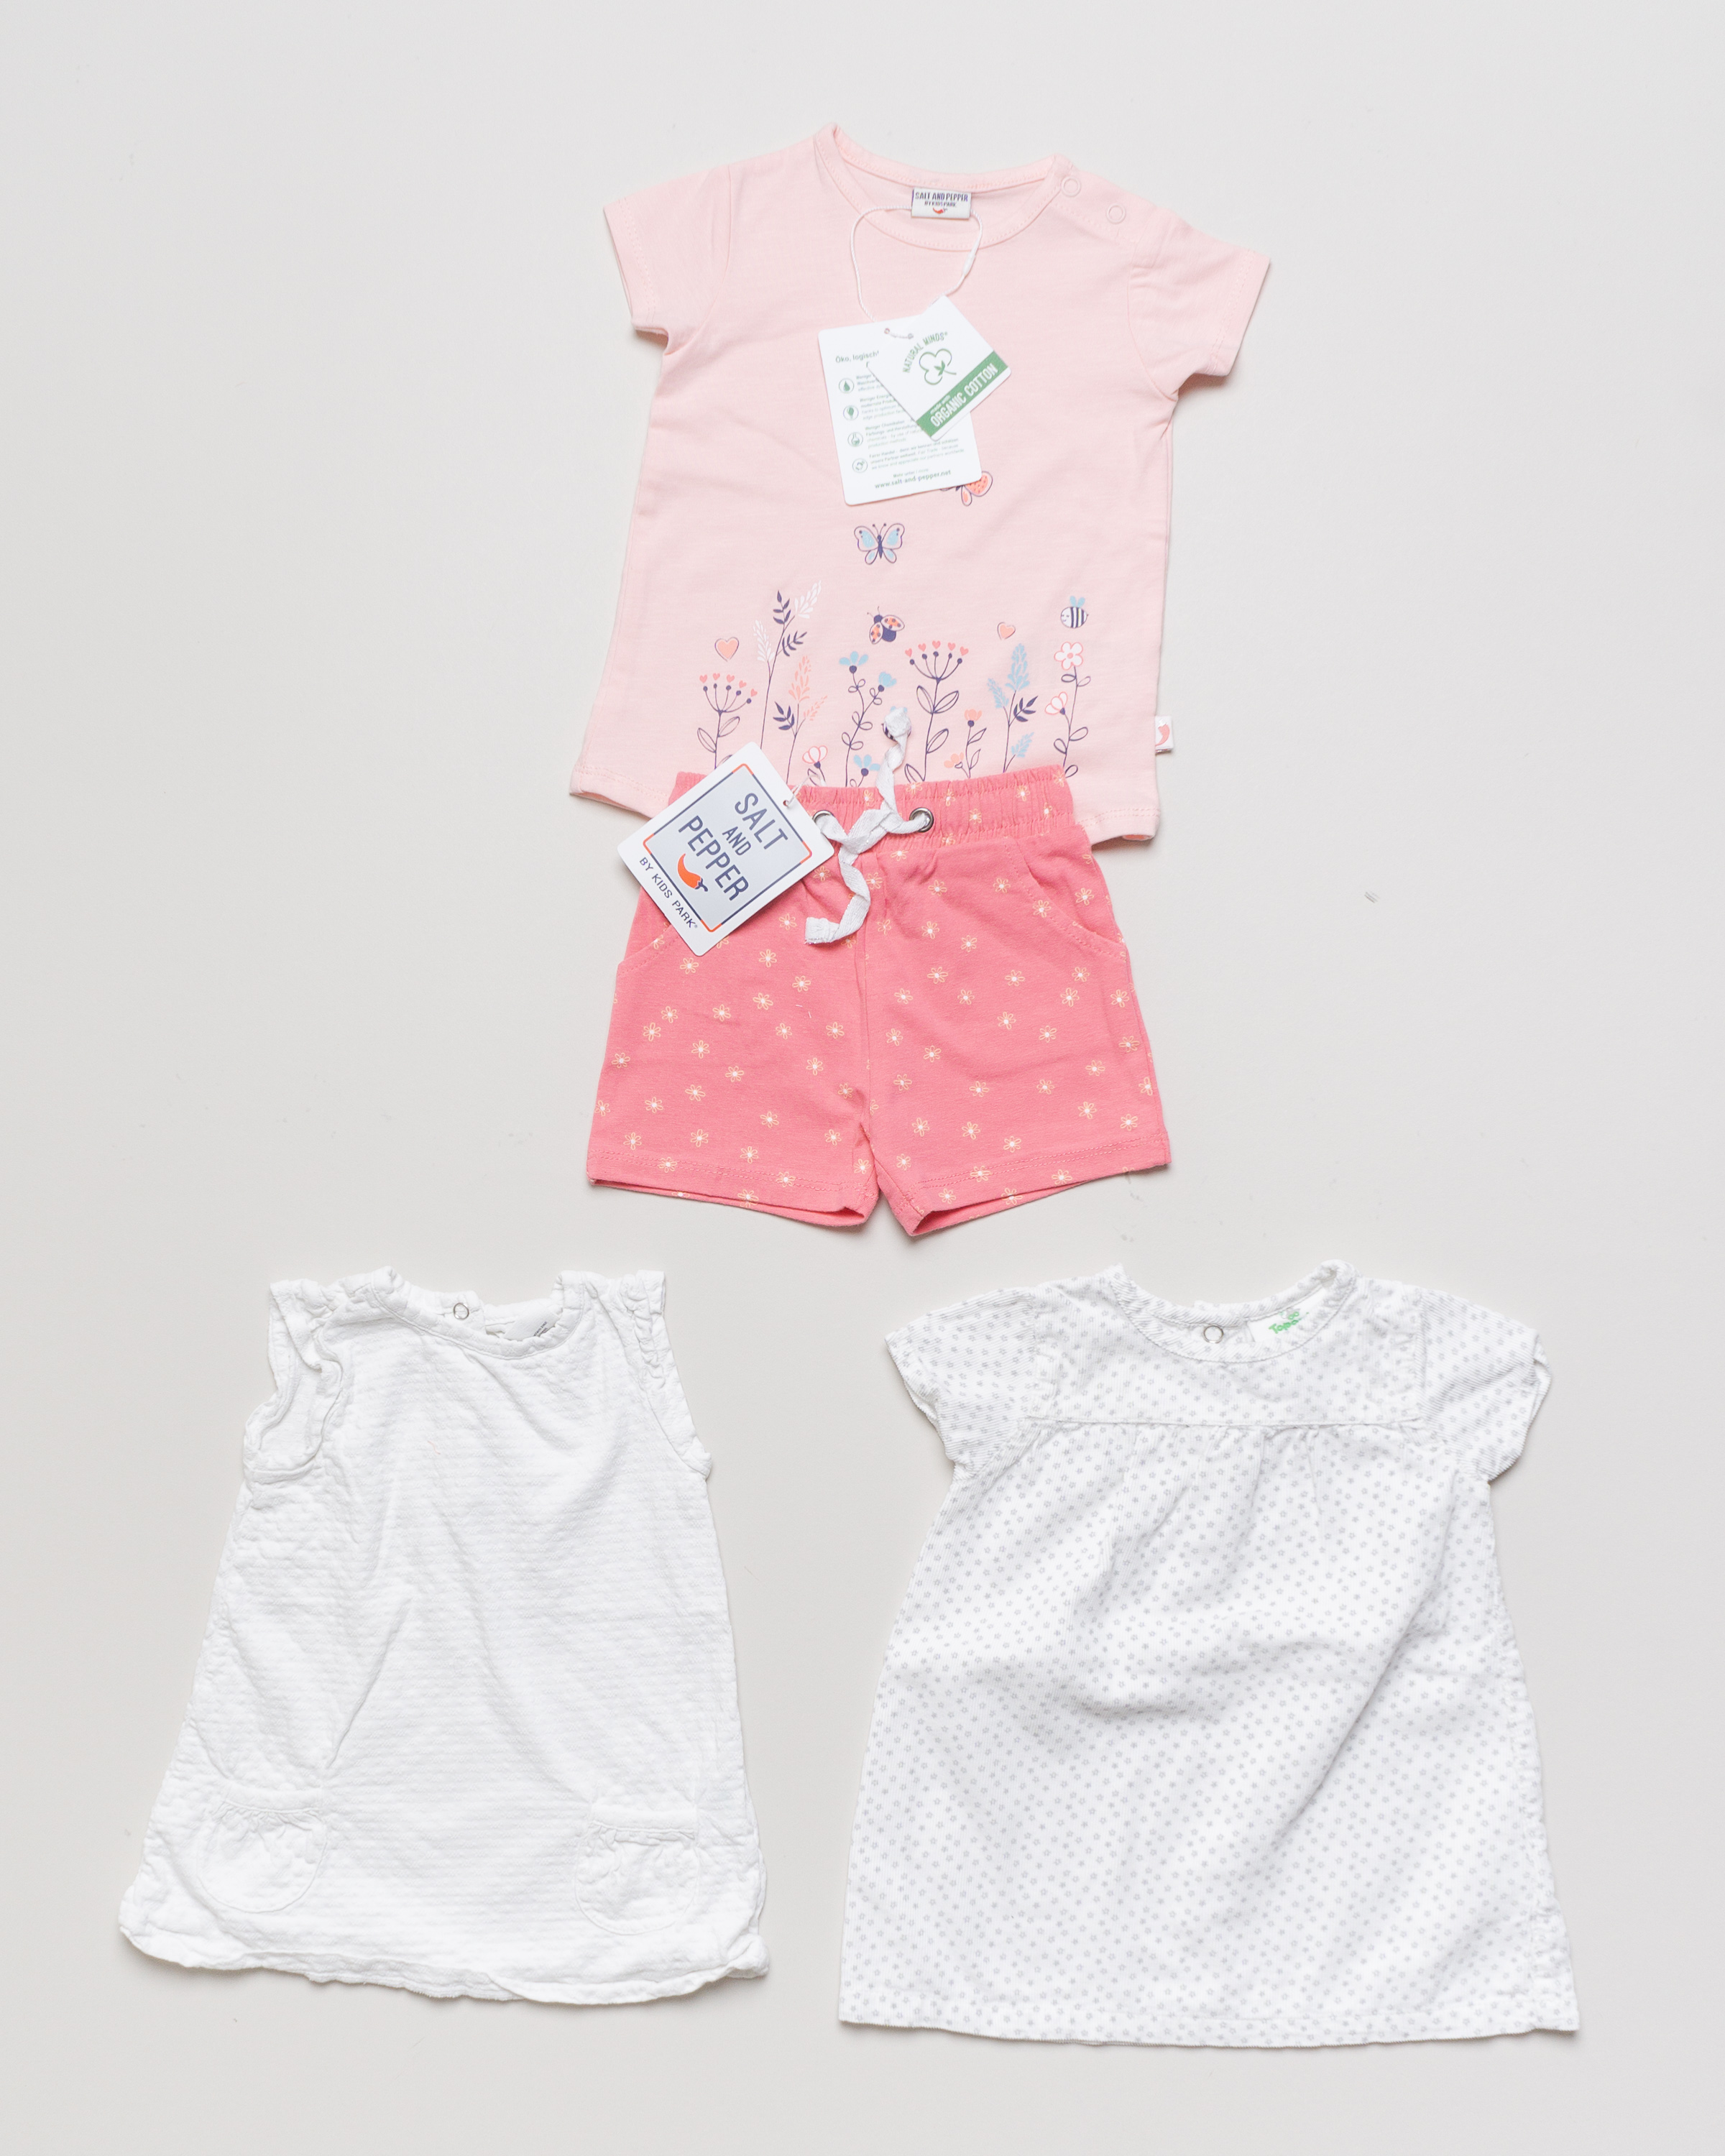 4er Set Gr. 68 – Bio NEU Salt and Pepper uni Kleider Shirts Shorts pastell zart 